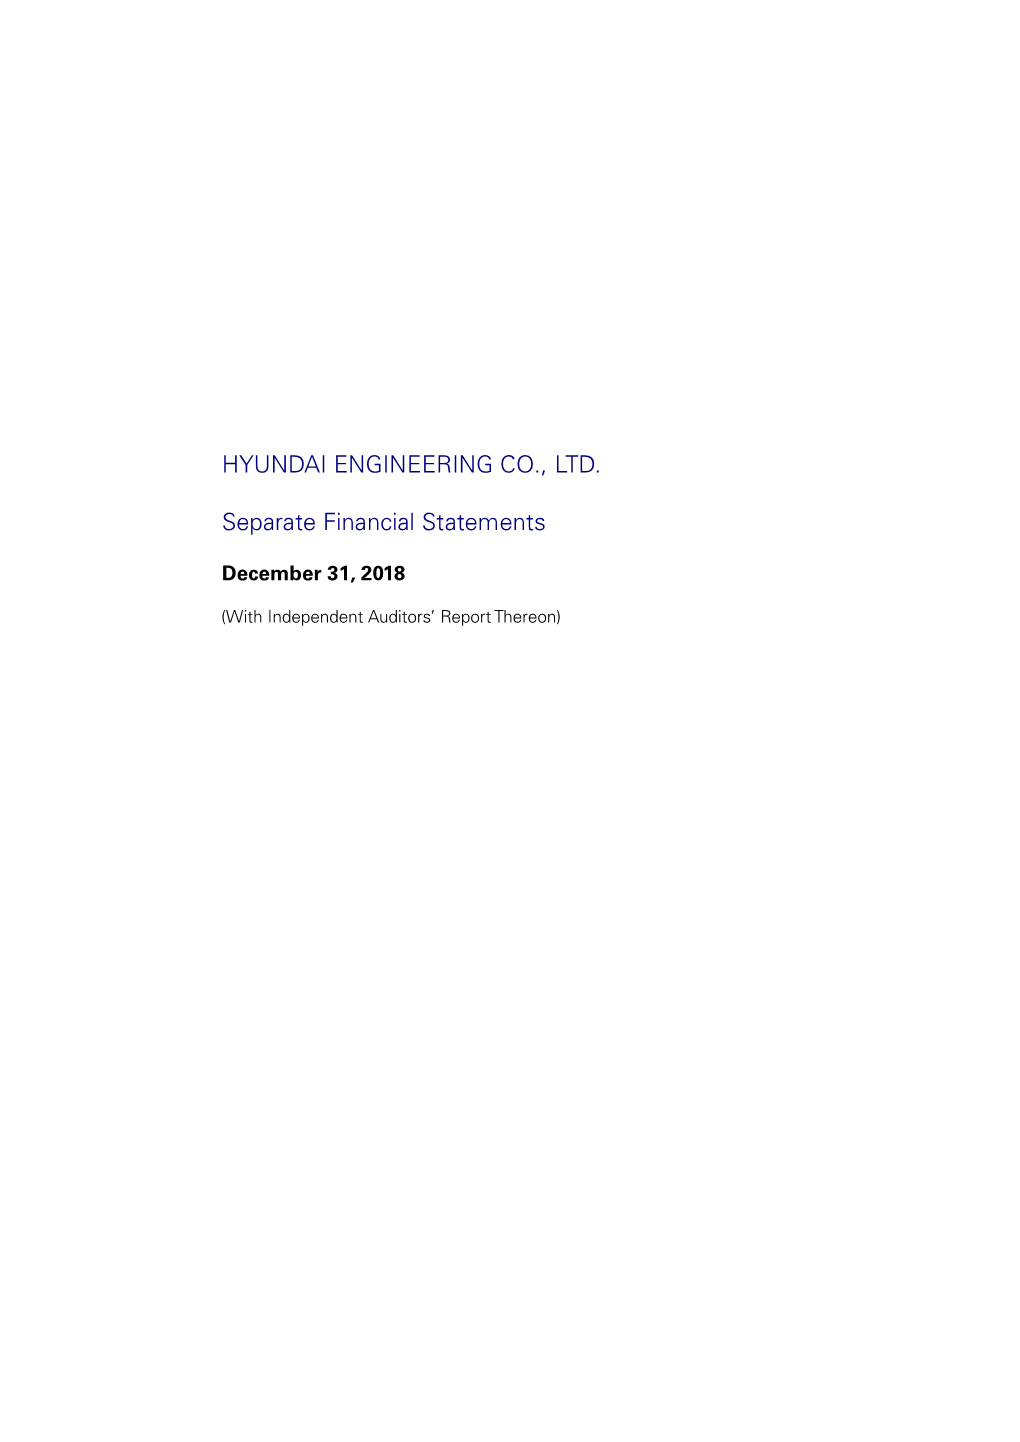 HYUNDAI ENGINEERING CO., LTD. Separate Financial Statements